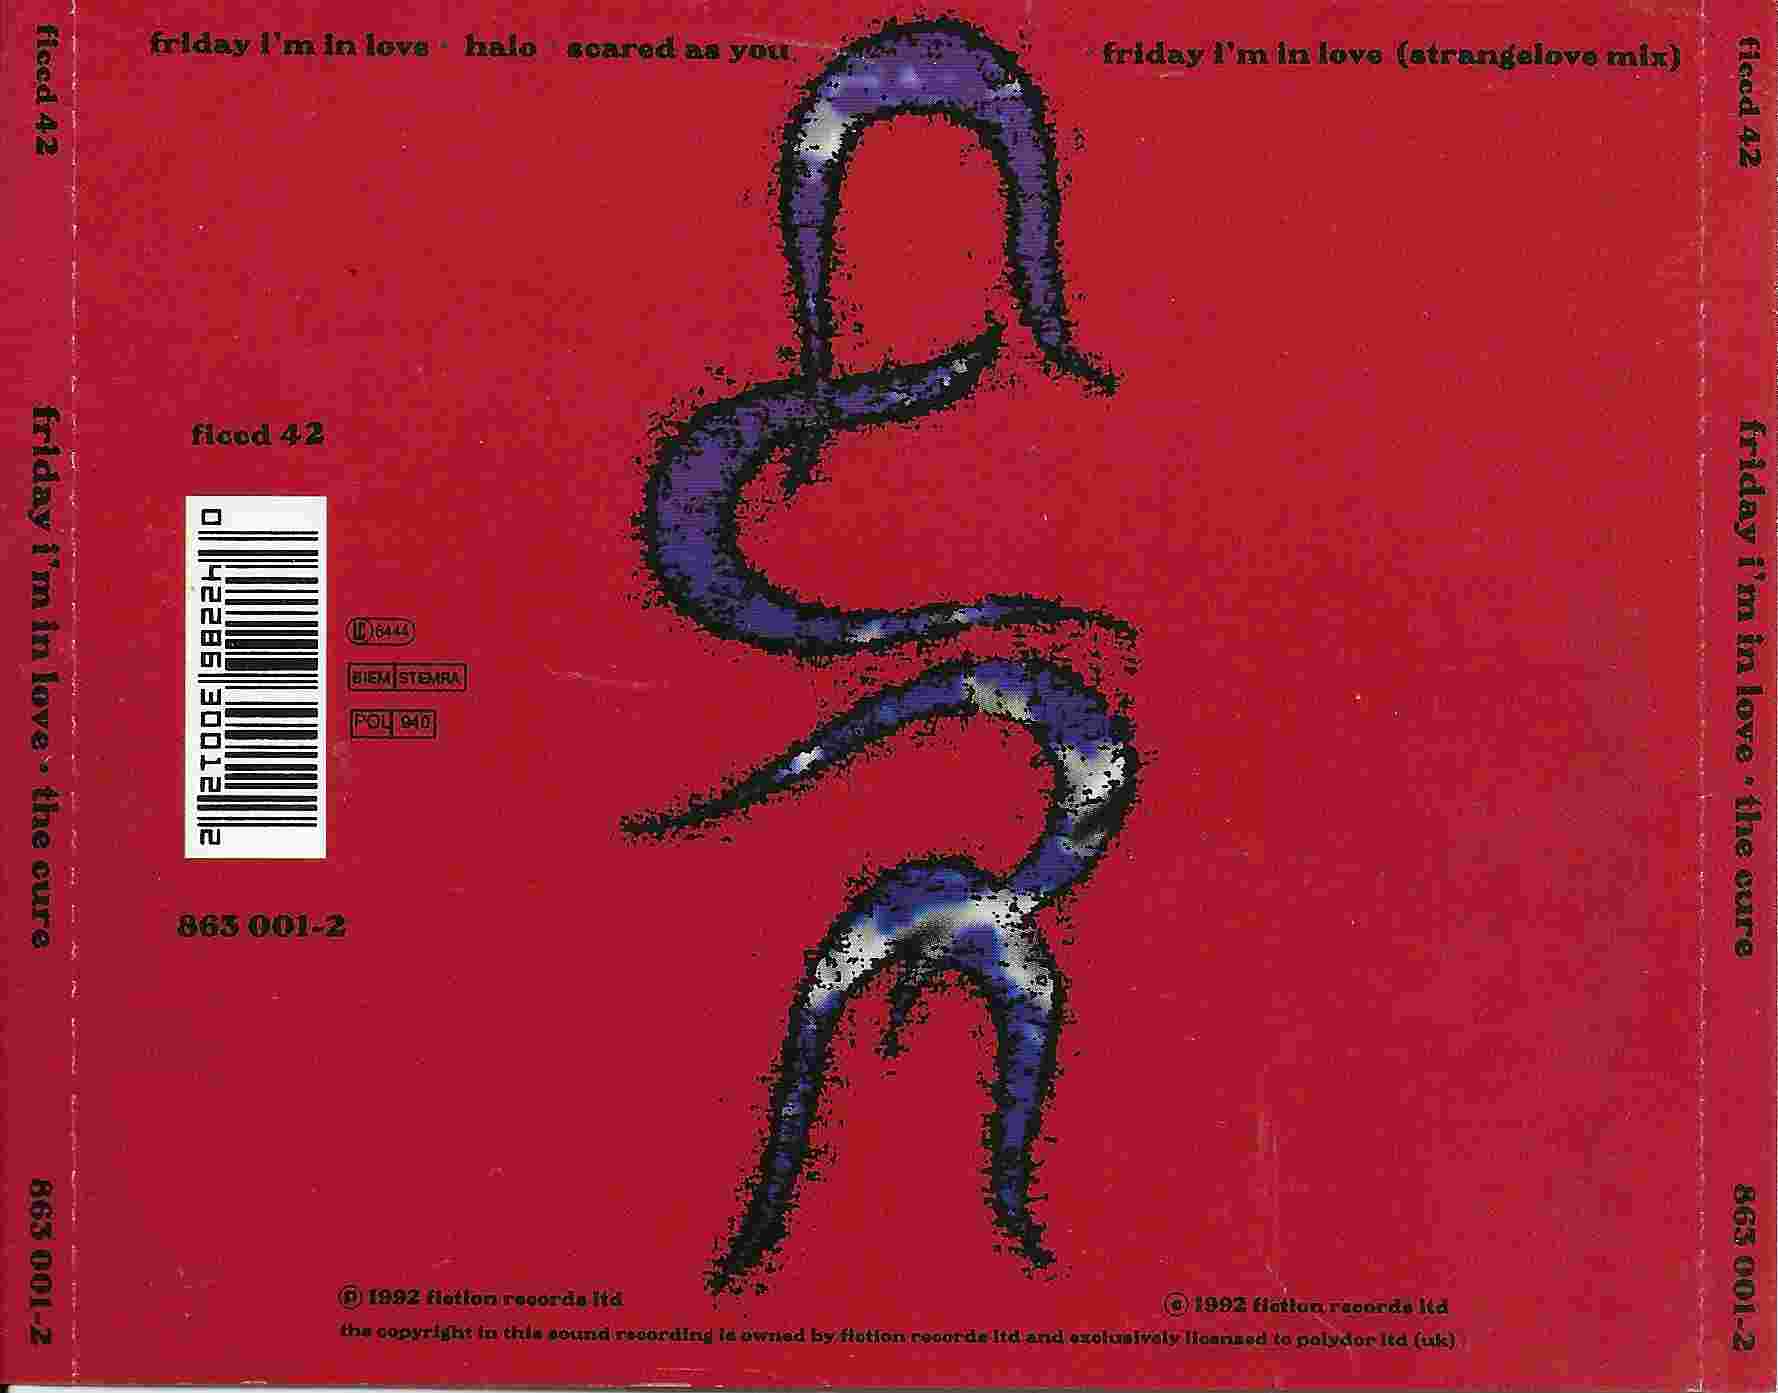 Back cover of FIC CD 42